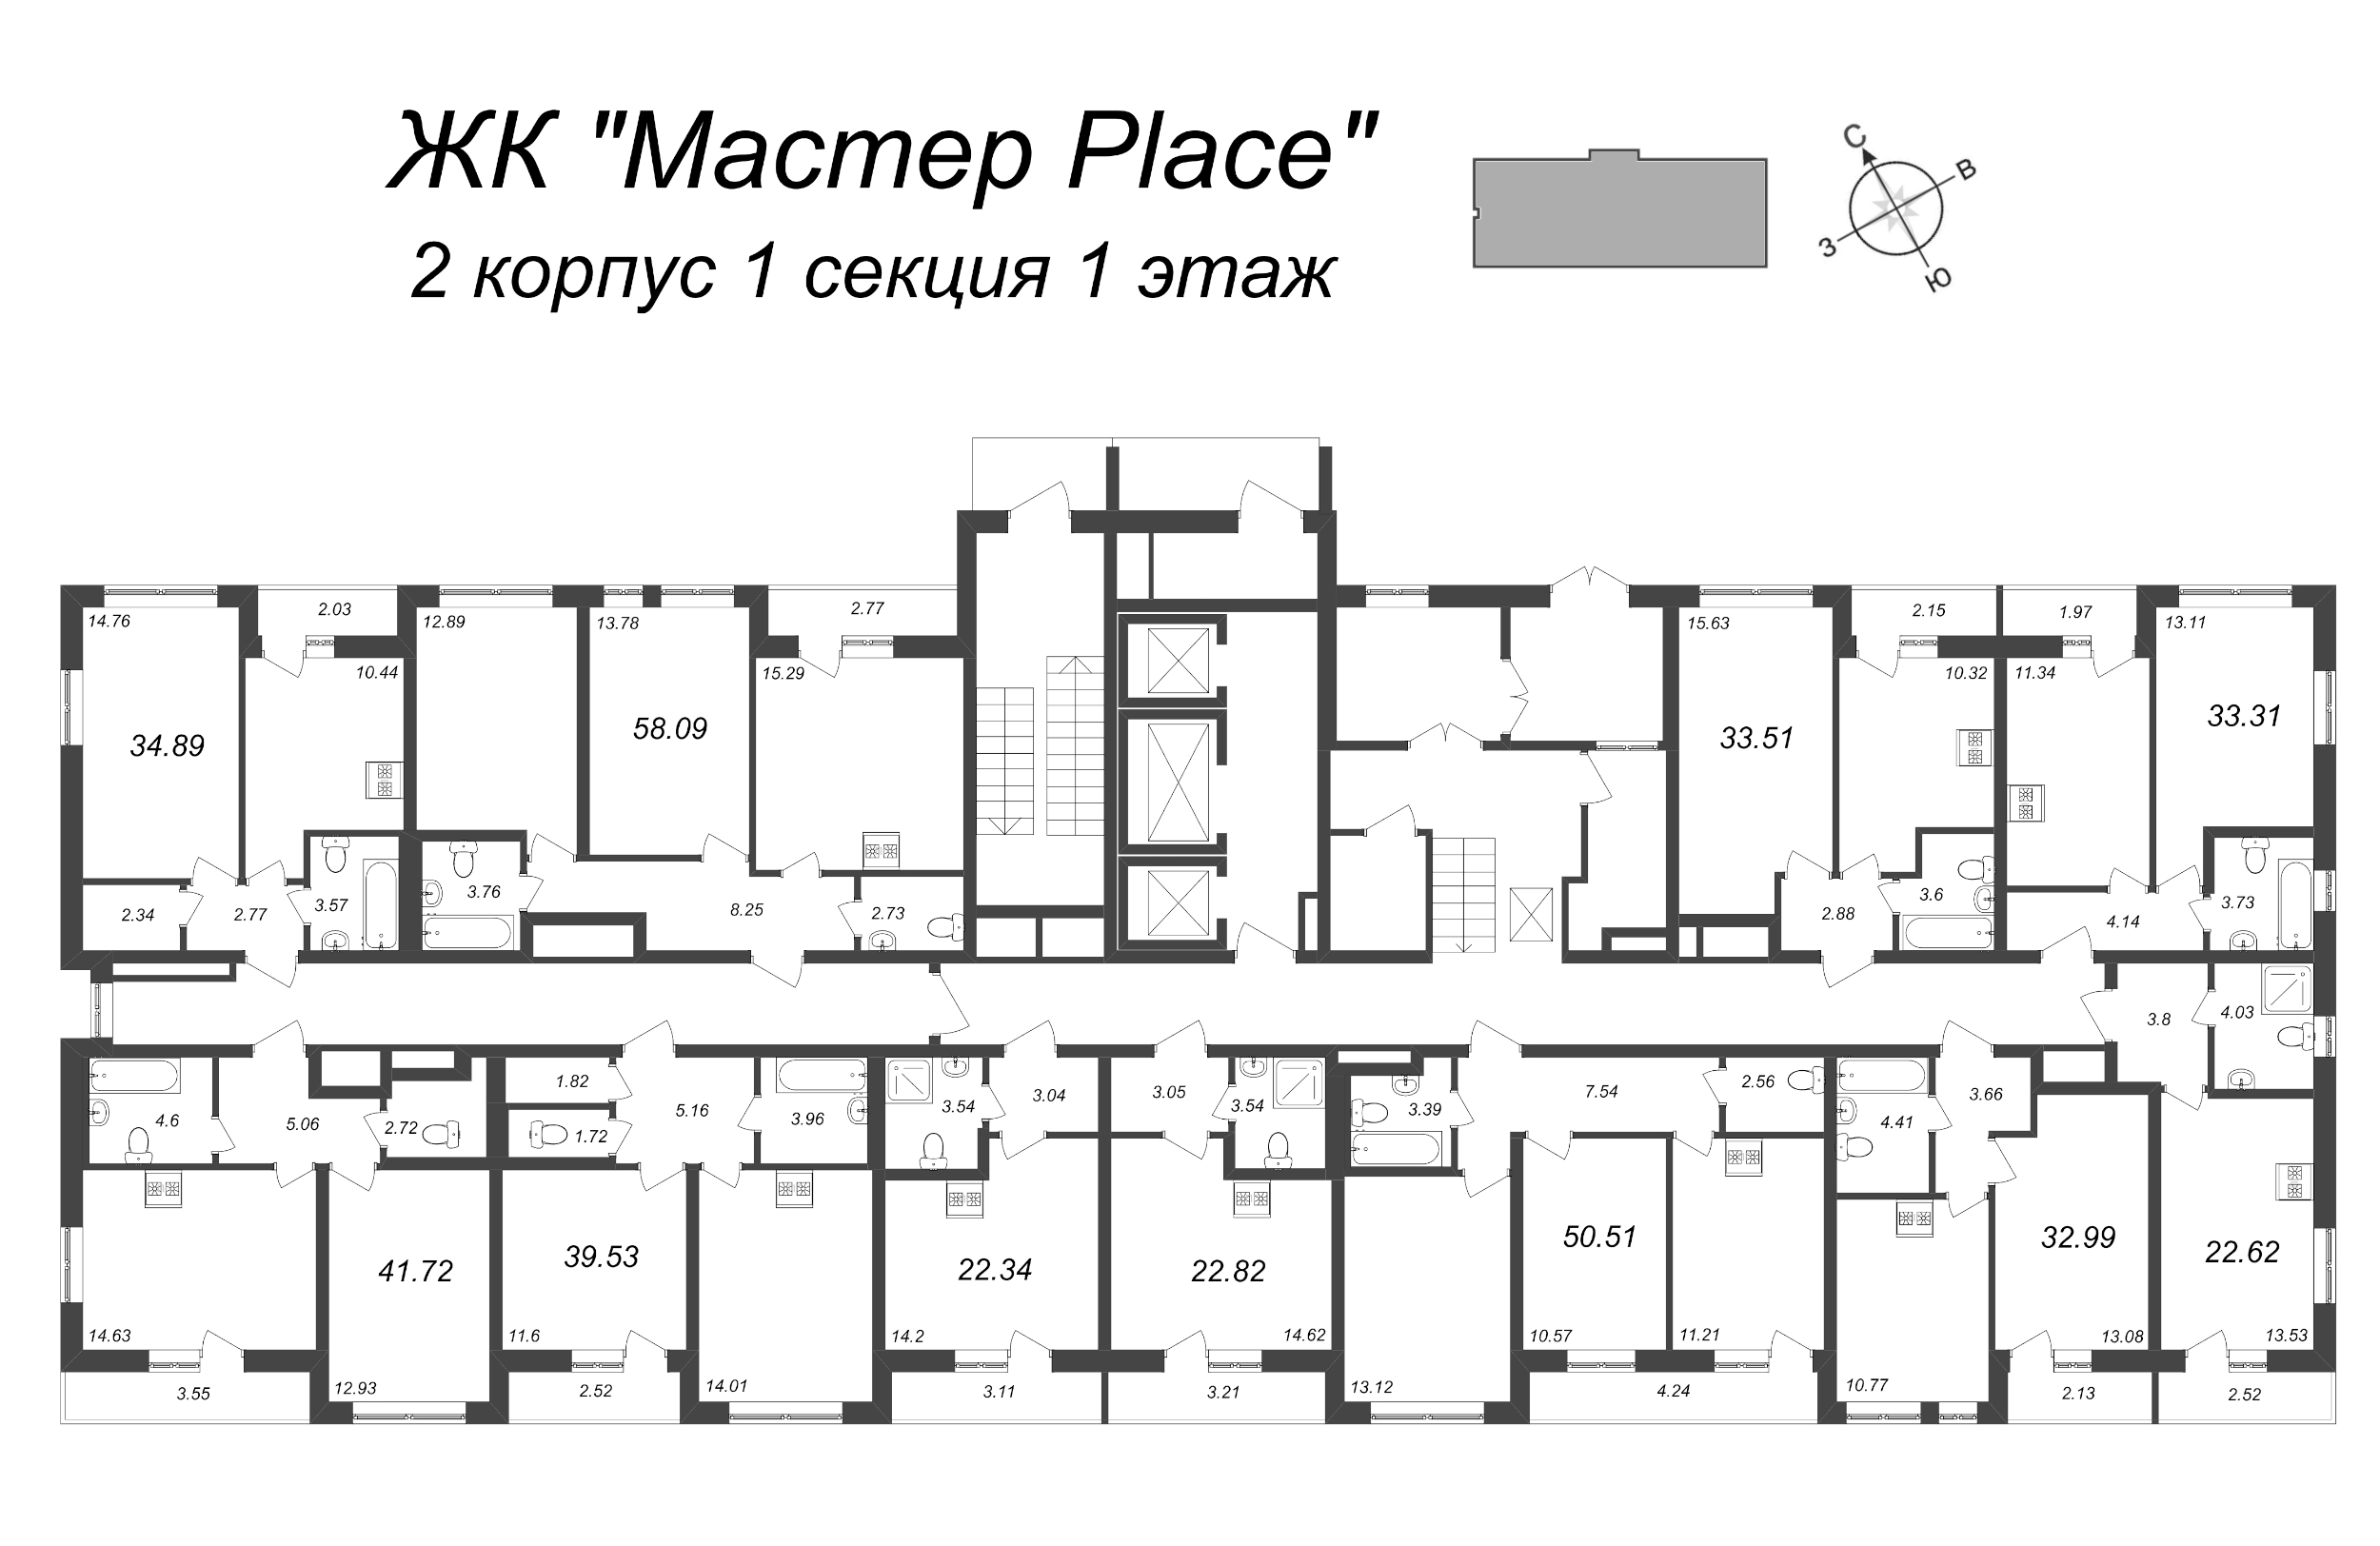 2-комнатная (Евро) квартира, 41.72 м² - планировка этажа